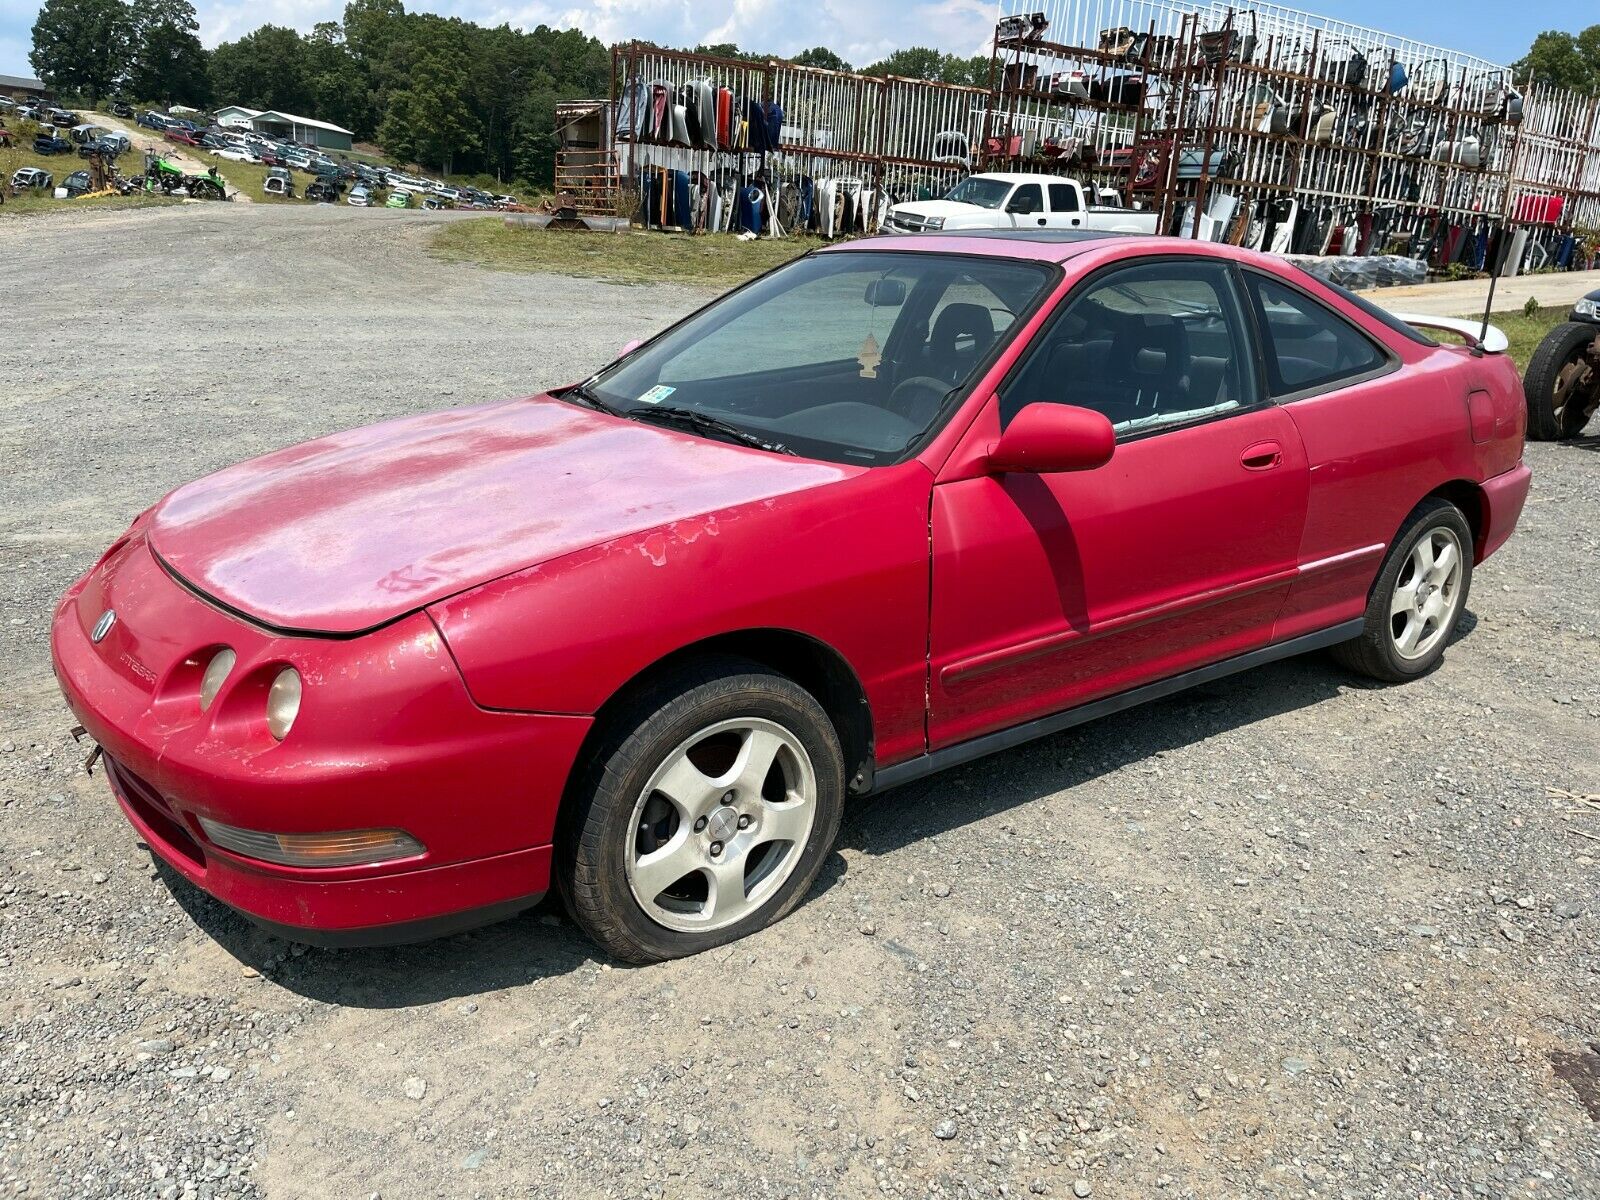 1996 Acura Integra